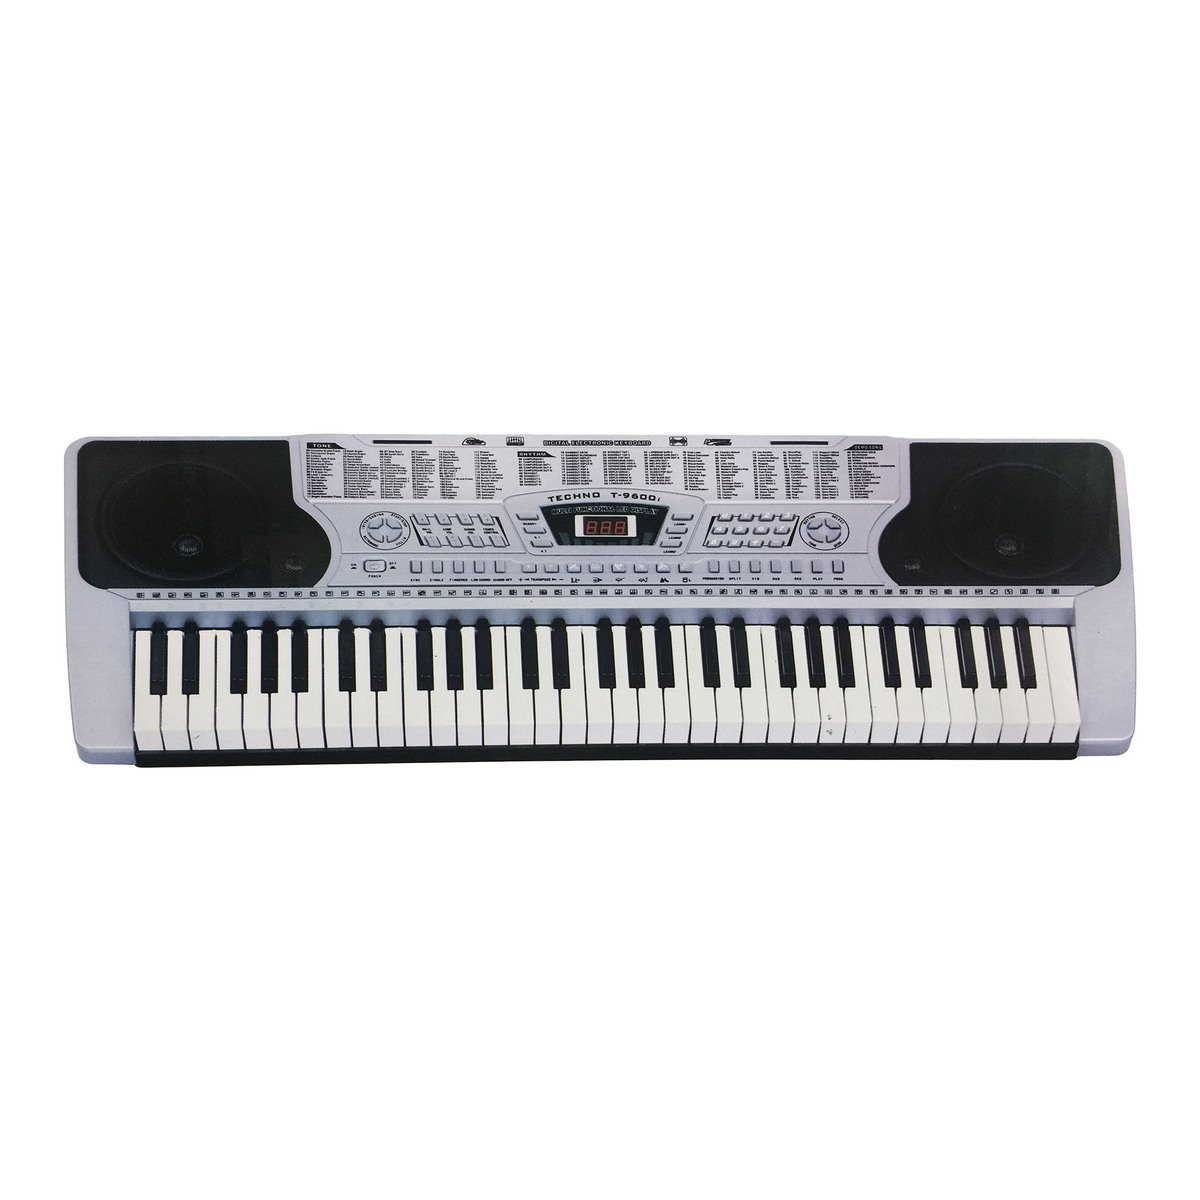 Techno Electronic Keyboard T-9600 g2